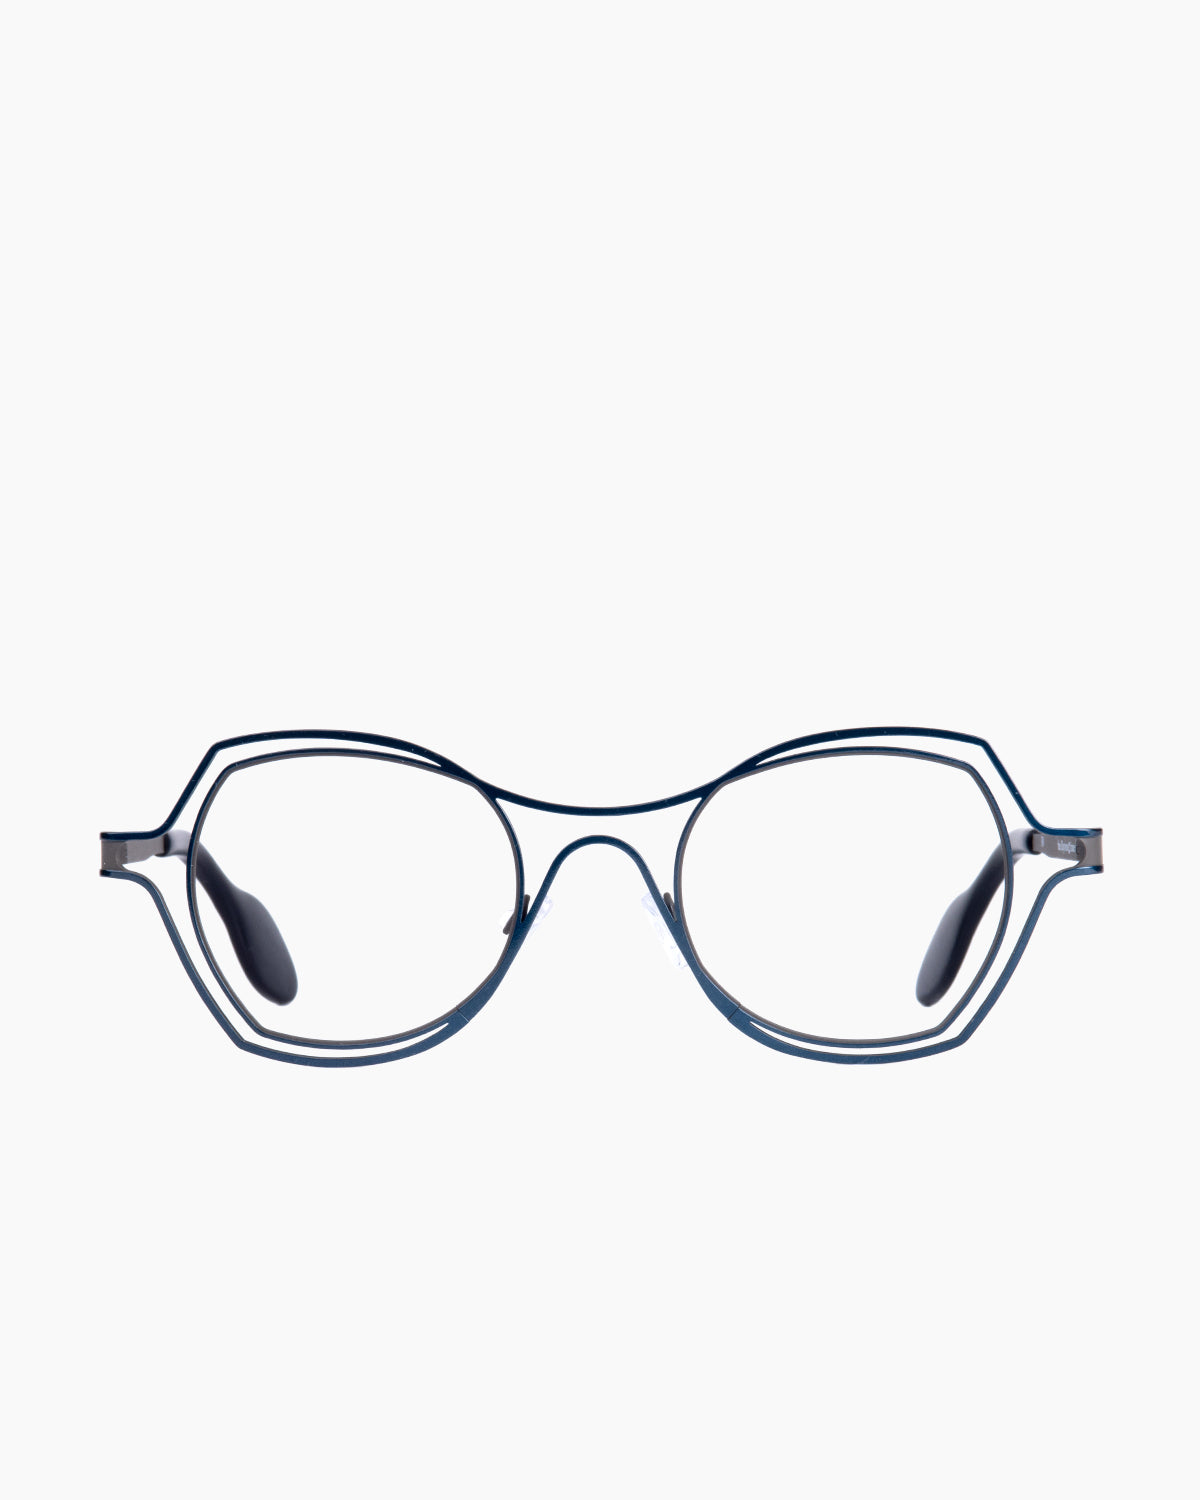 Theo - DAYTONA - 380 | Bar à lunettes:  Marie-Sophie Dion